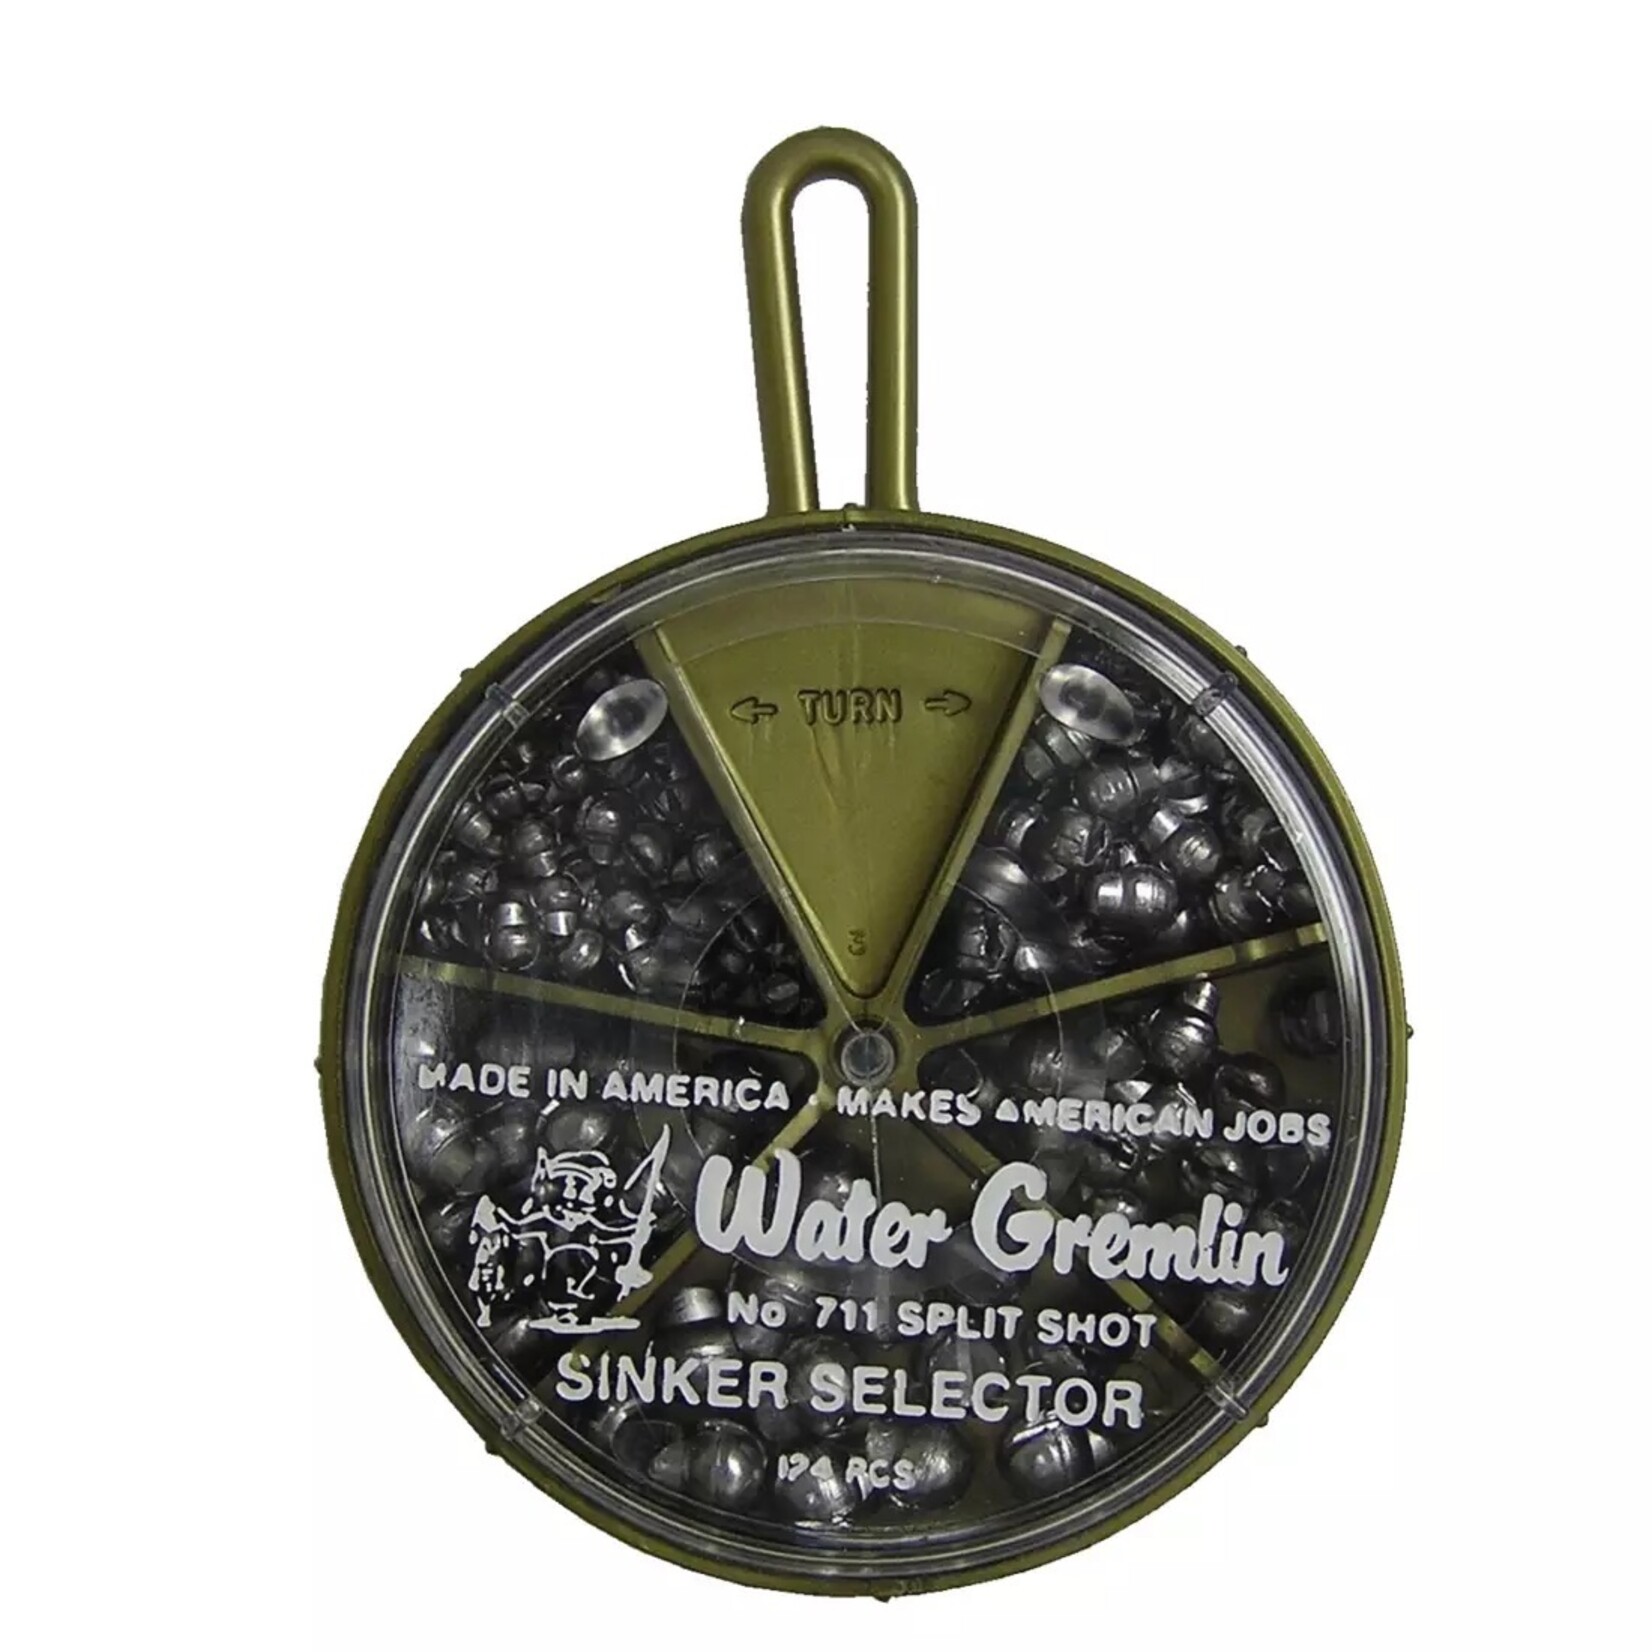 WATER GREMLIN CO. WATER GREMLIN SINKER SELECTOR